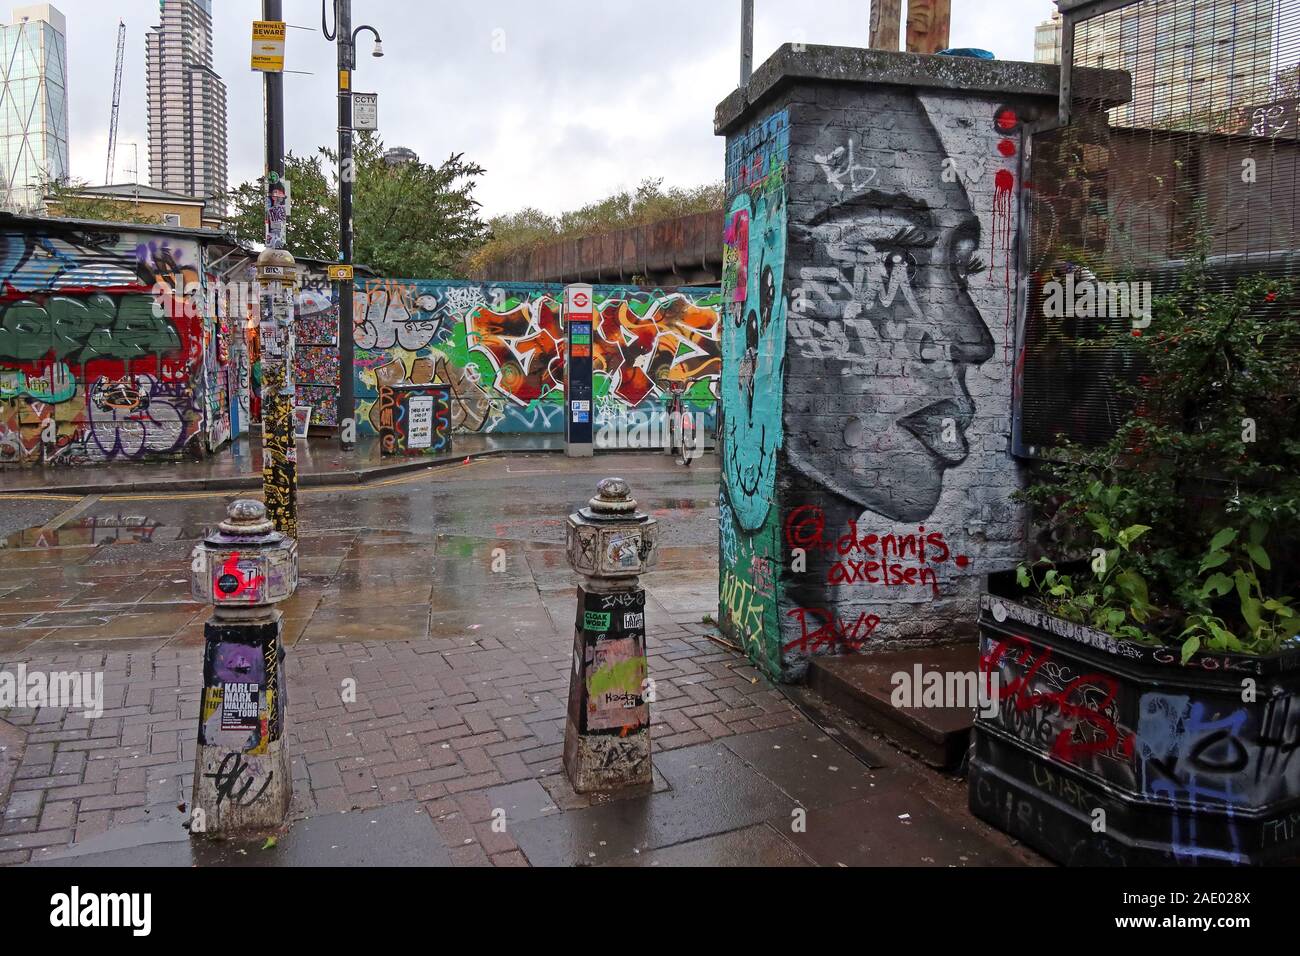 Brick Lane,art and graffiti,Shoreditch,Tower Hamlets,East End,London,South East,England,UK, E1 6QL Stock Photo